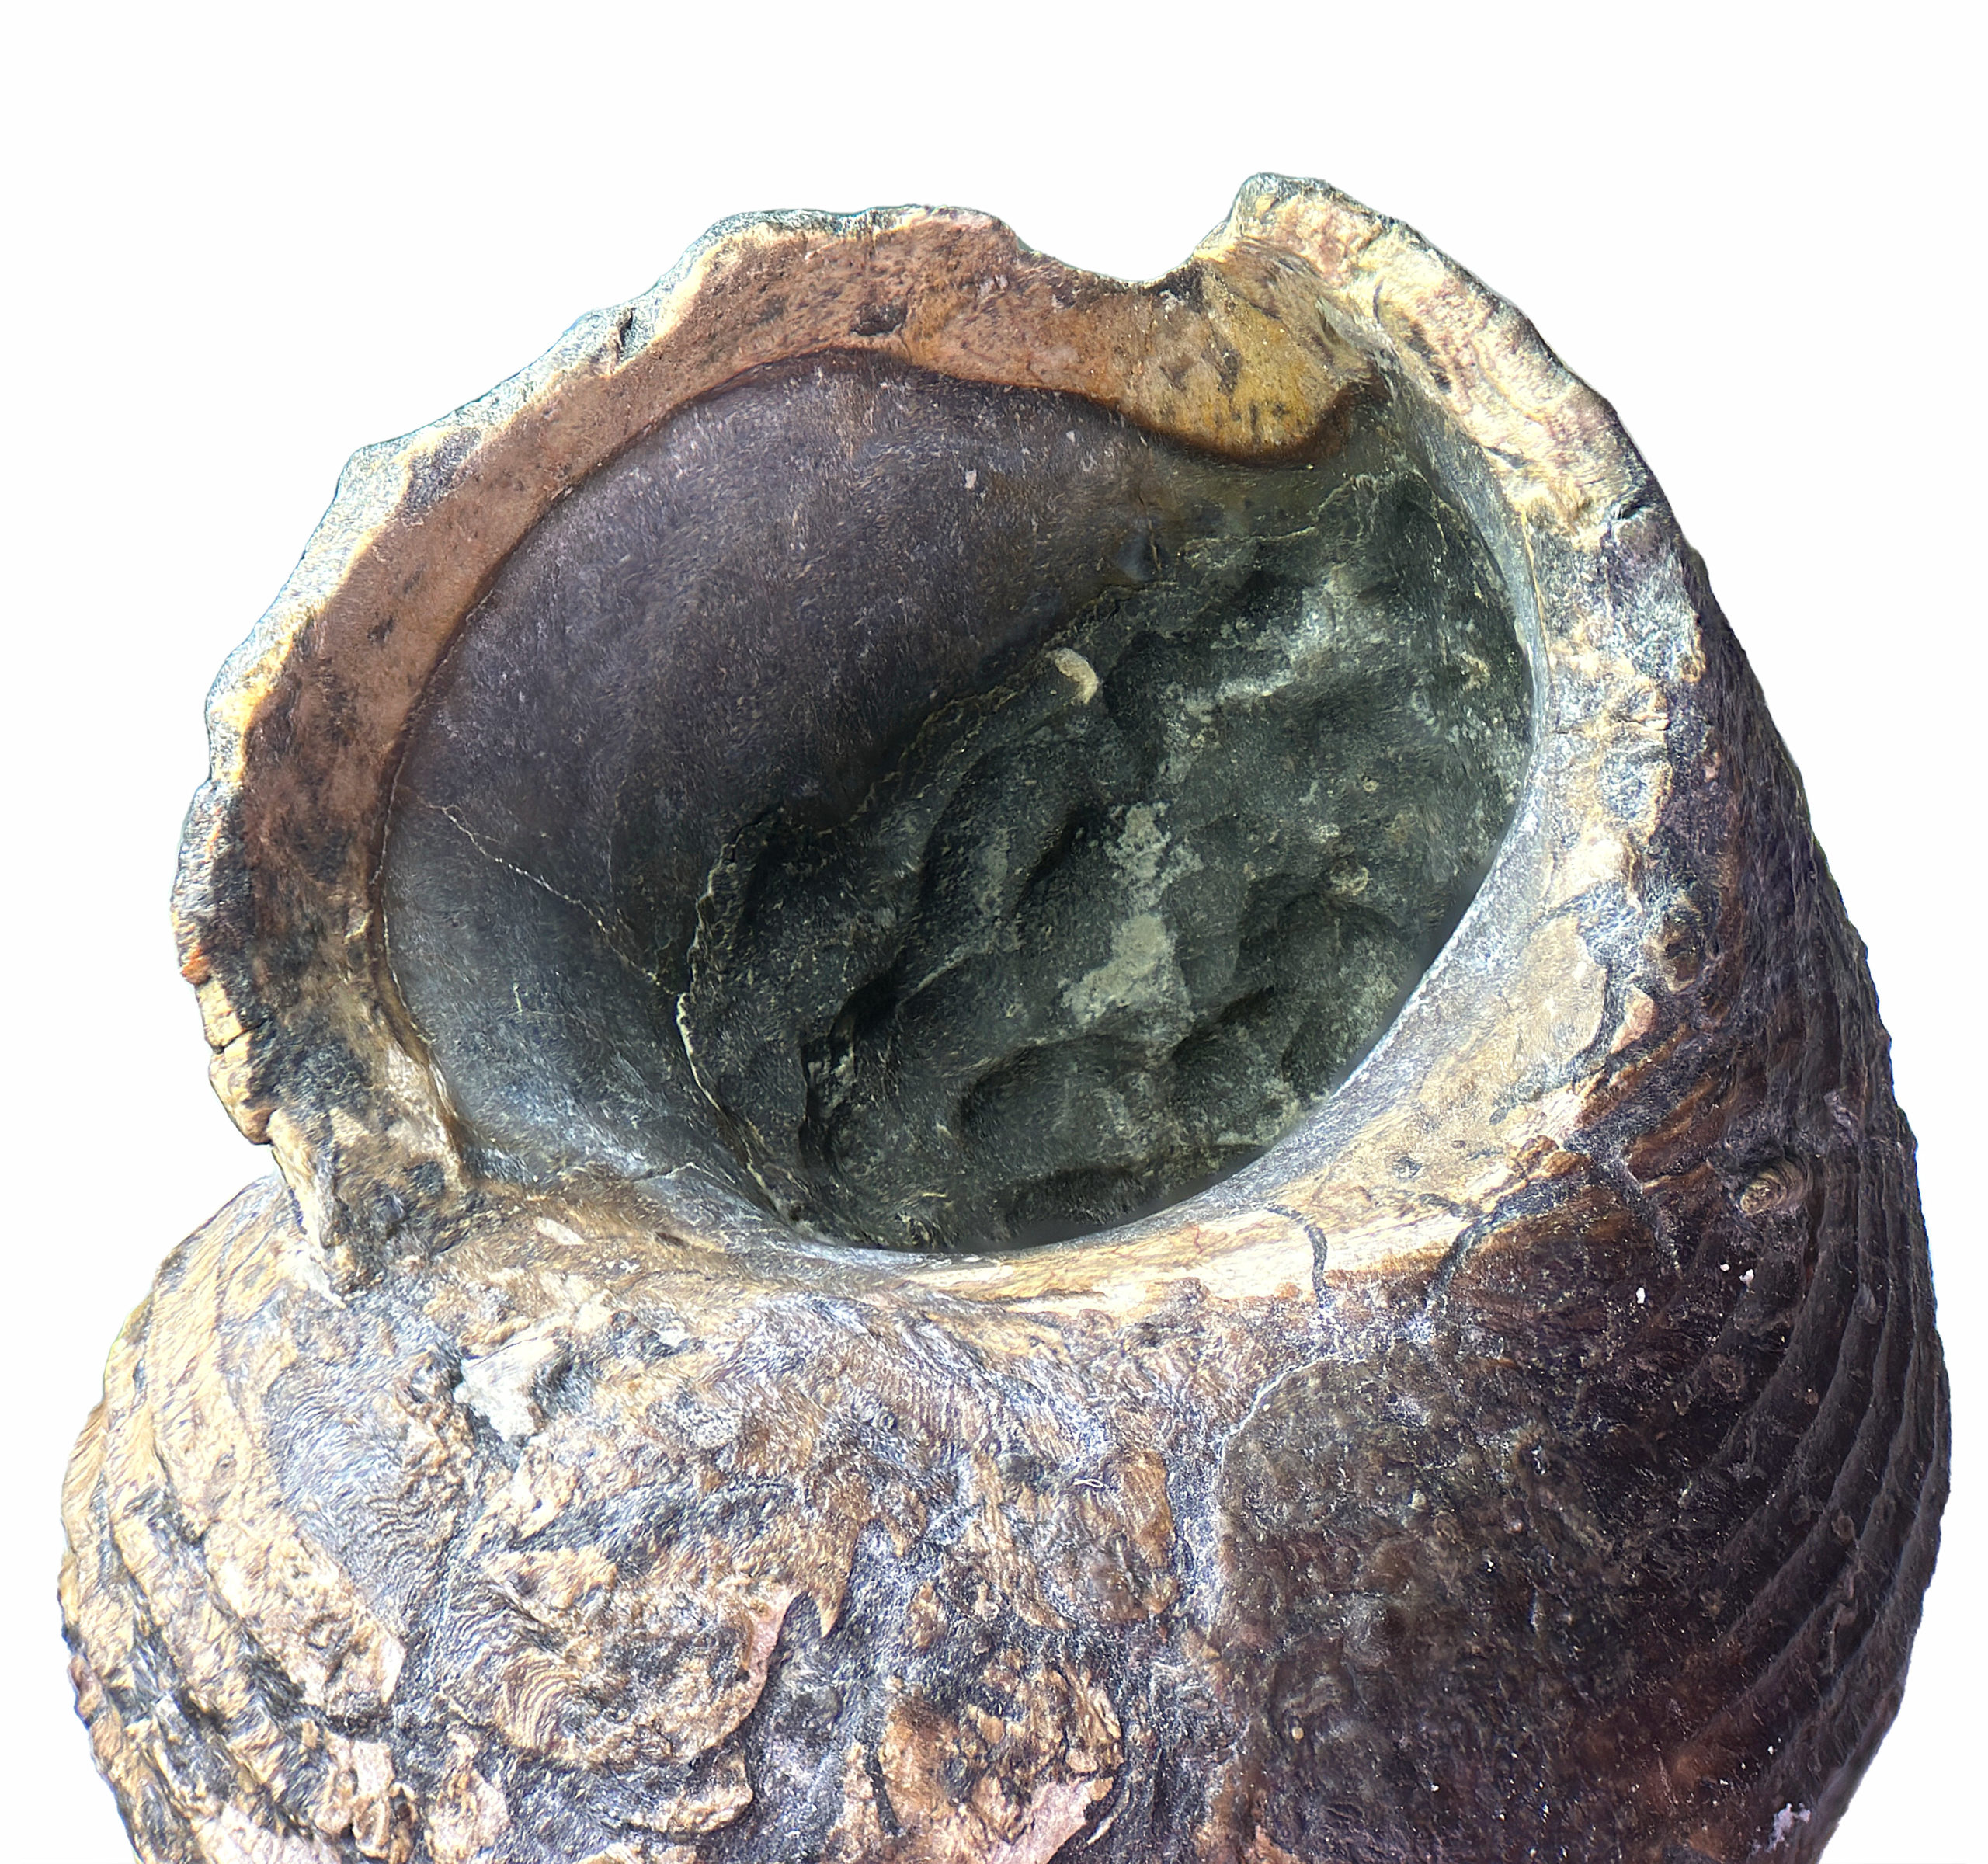 Shansiella carbonaria showing an inner nacre margin.